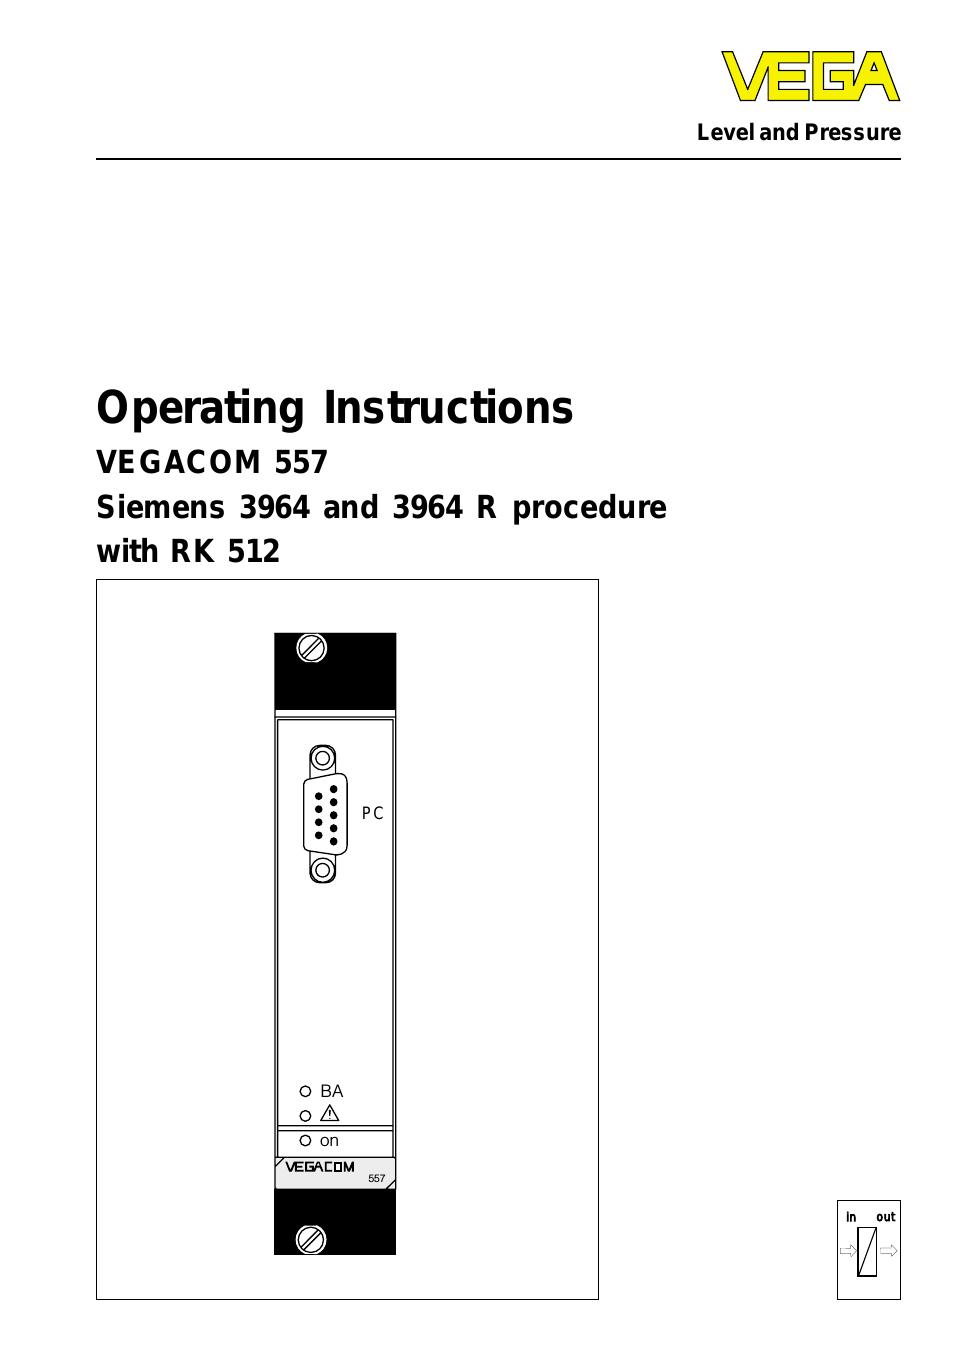 VEGACOM 557 Siemens 3964 and 3964 R procedure with RK 512